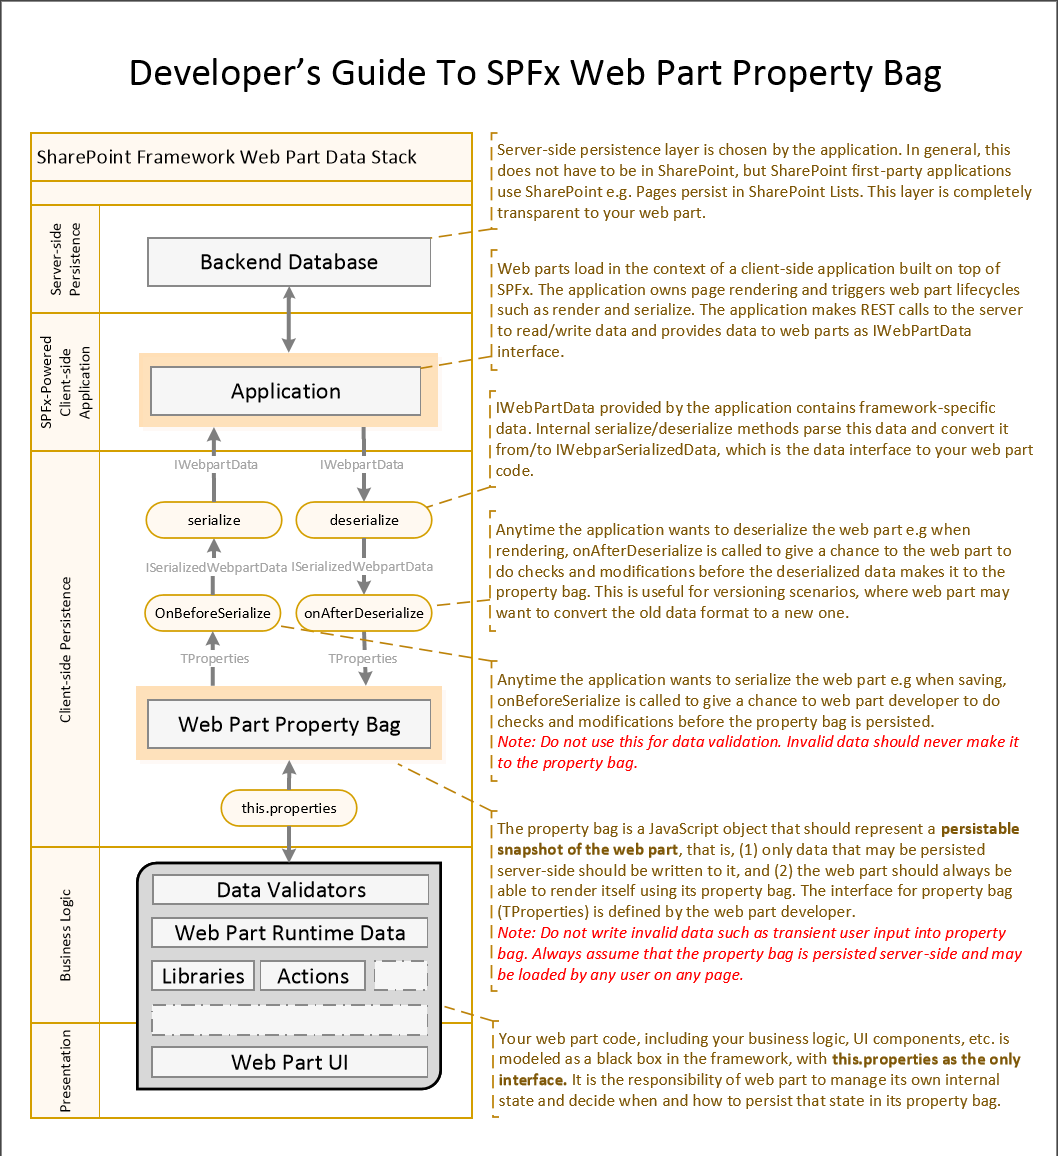 Schema illustrating how the SharePoint Framework handles web part properties